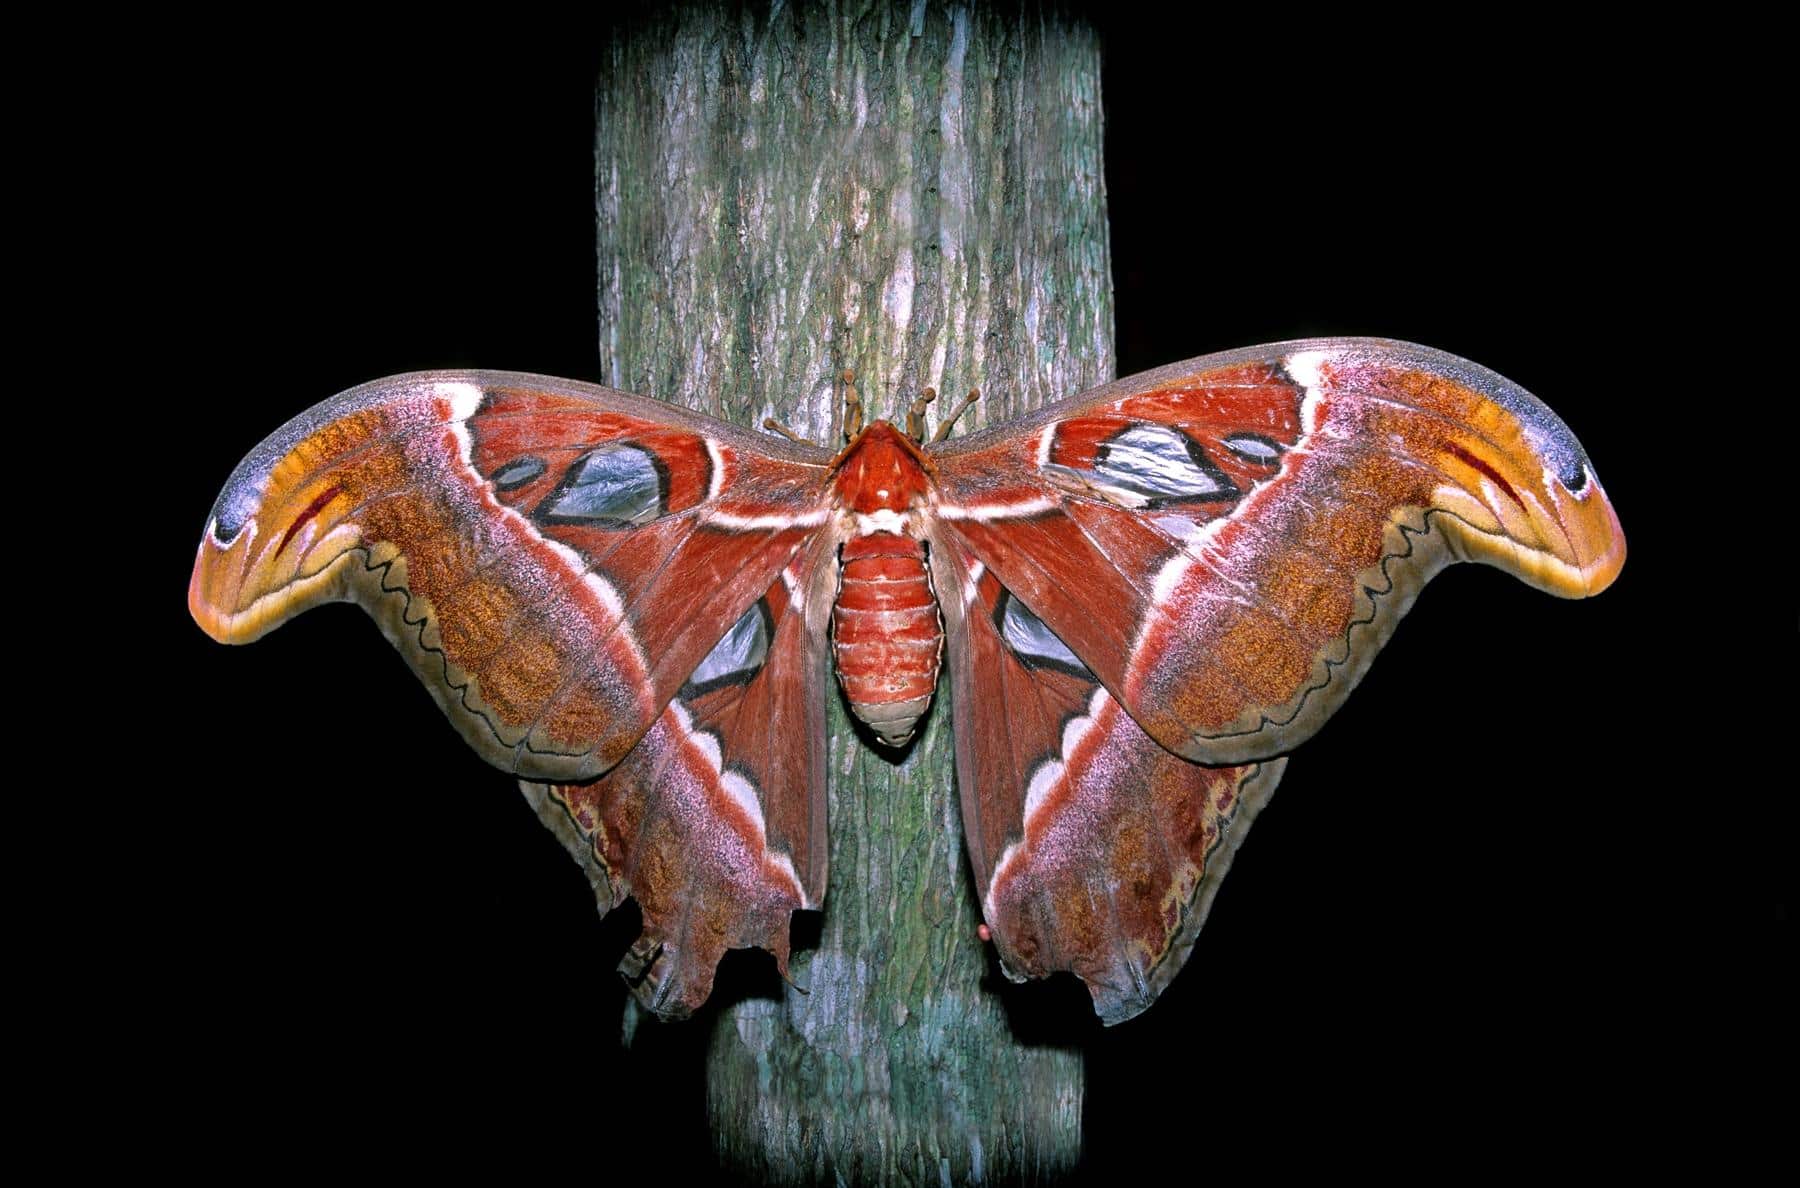 Atlas moths never eat, surviving their short lives on fat reserves